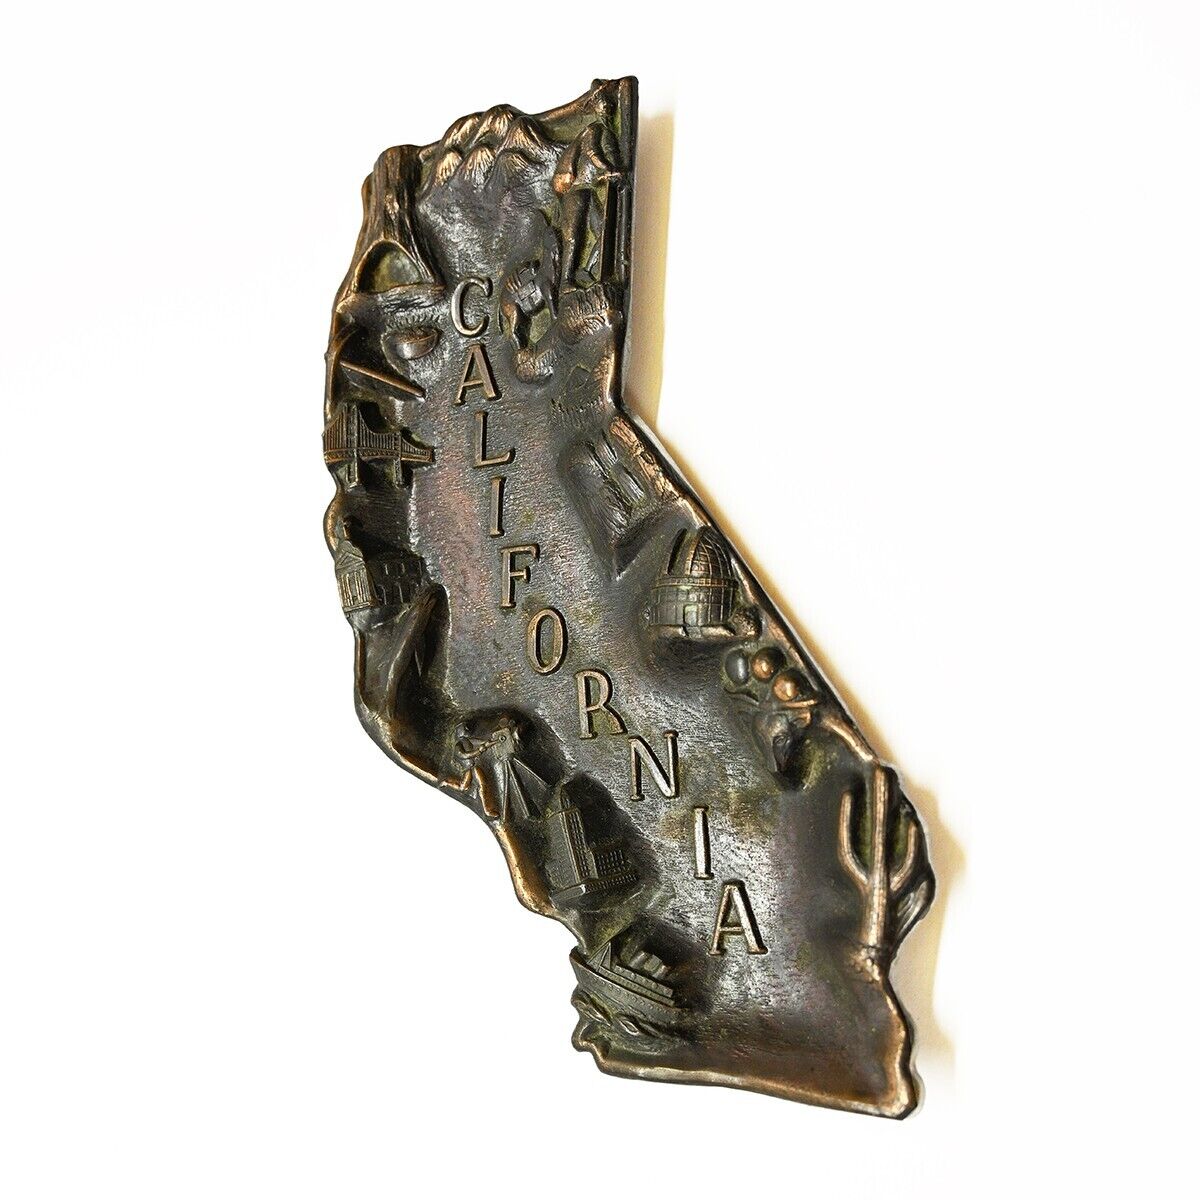 VTG California Metal Souvenir Trinket Tray Shape of State Details of History